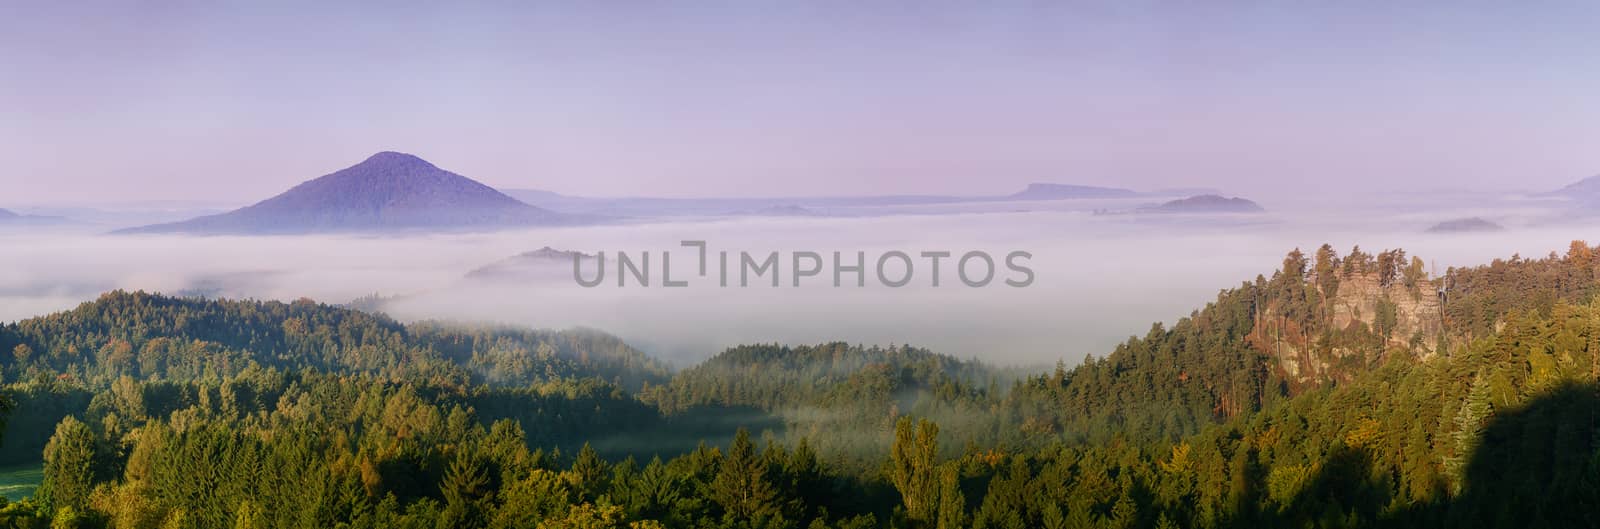 foggy dawn over the Ruzovsky vrch highest peak of national park Bohemian Switzerland, Czech Republic